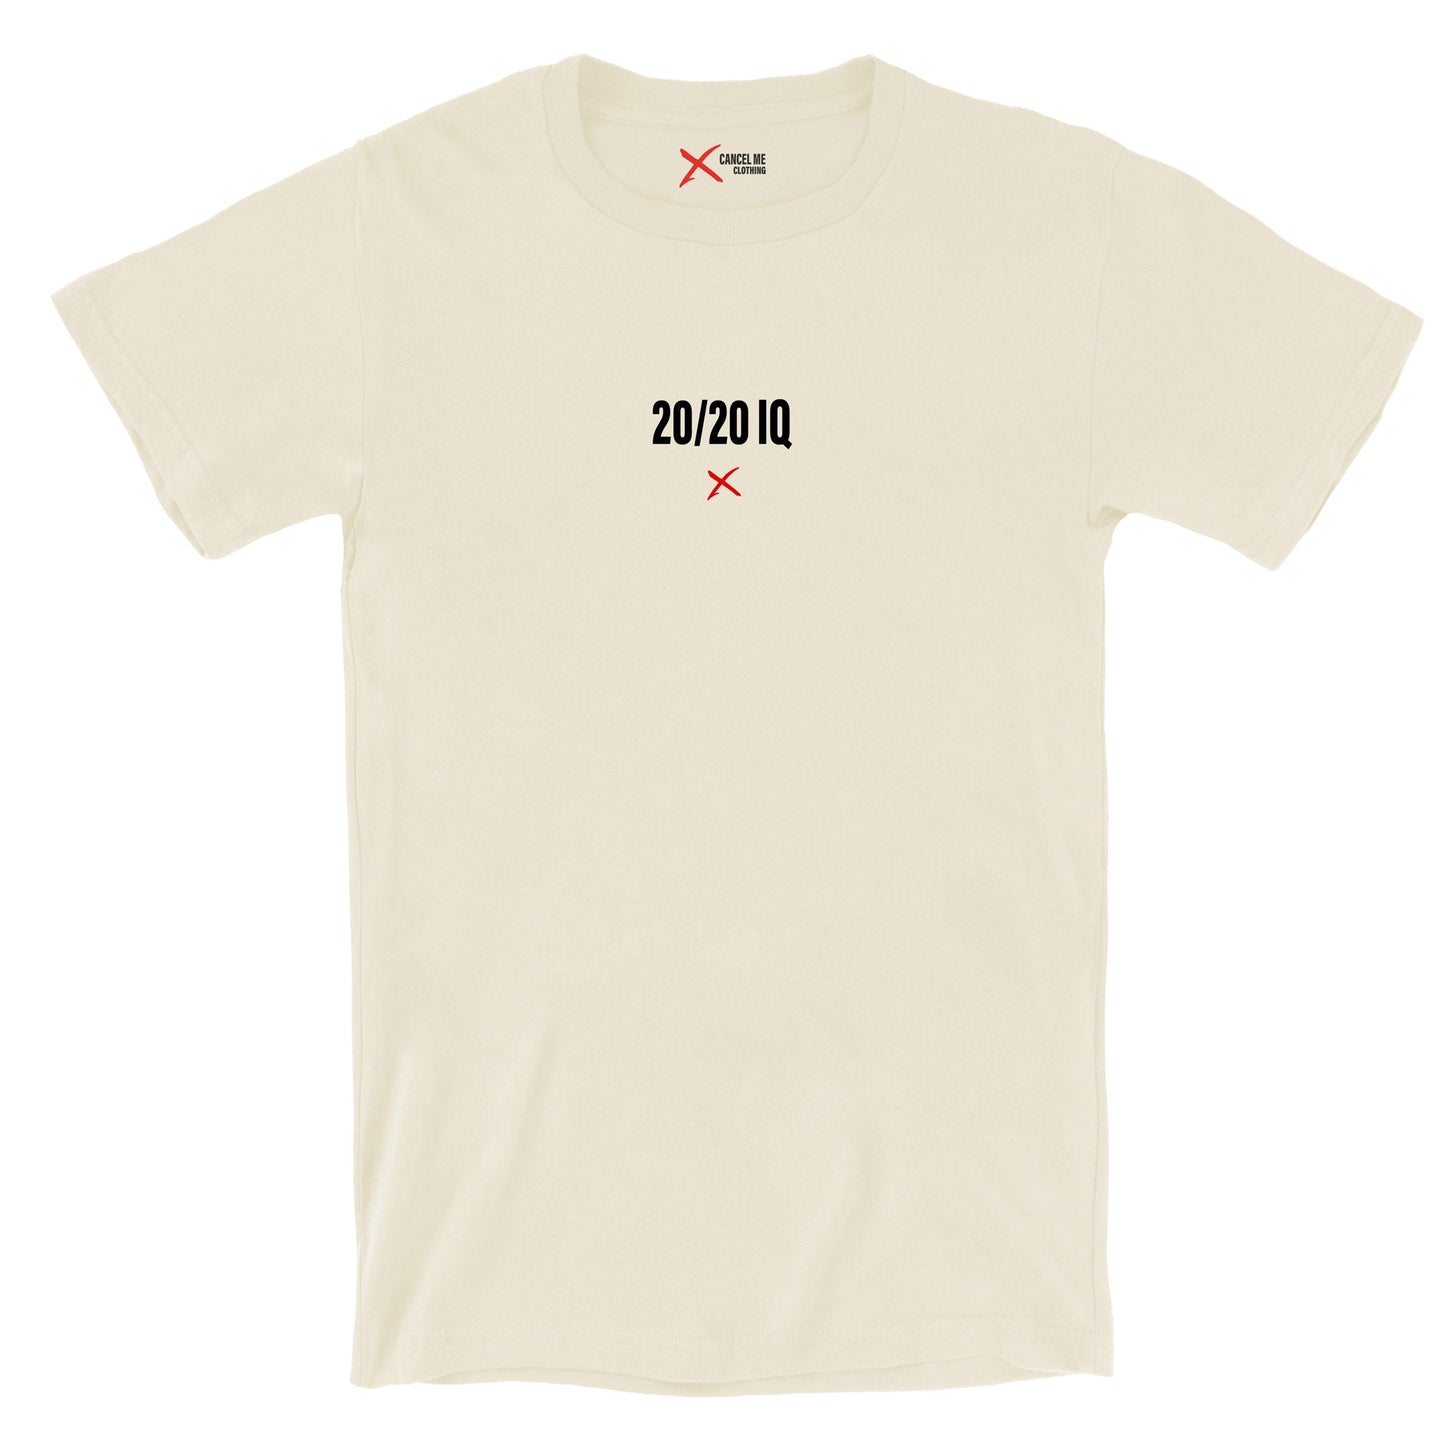 20/20 IQ - Shirt